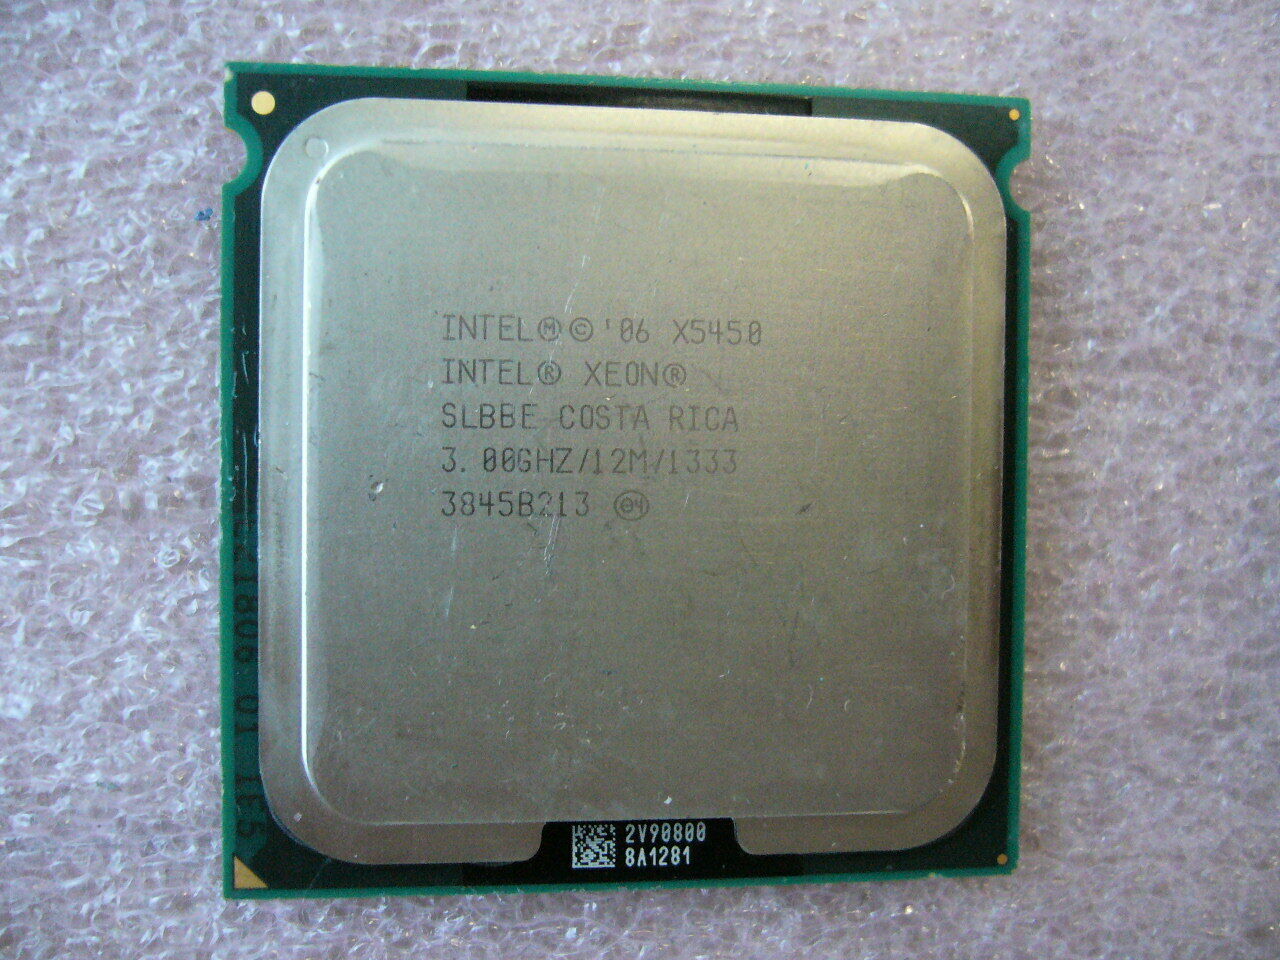 Intel Xeon CPU Quad Core X5450 3.00Ghz/12MB/1333Mhz LGA771 SLASB SLBBE